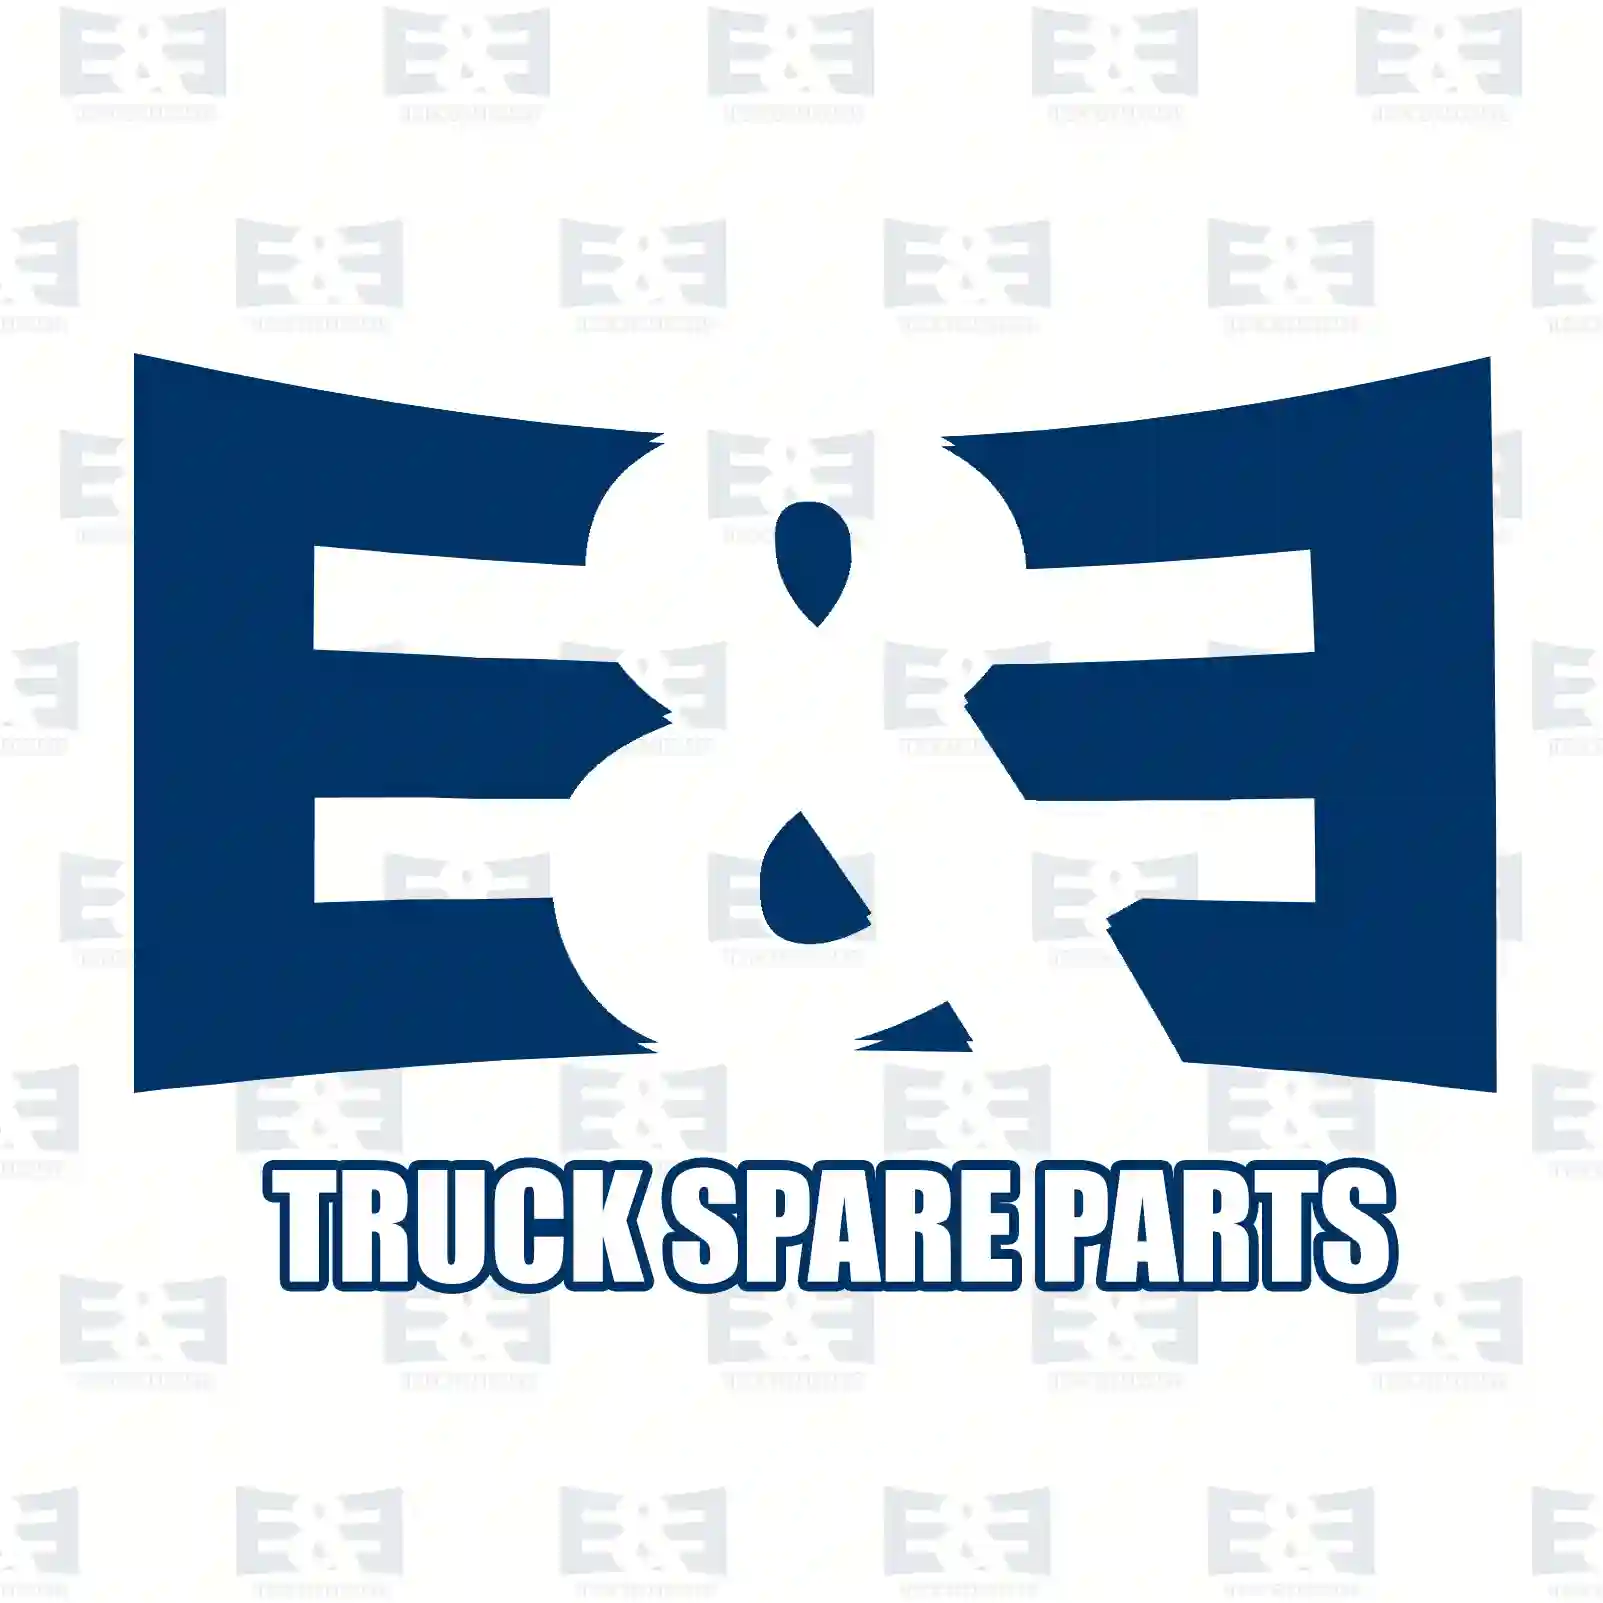  Gear shift rod || E&E Truck Spare Parts | Truck Spare Parts, Auotomotive Spare Parts